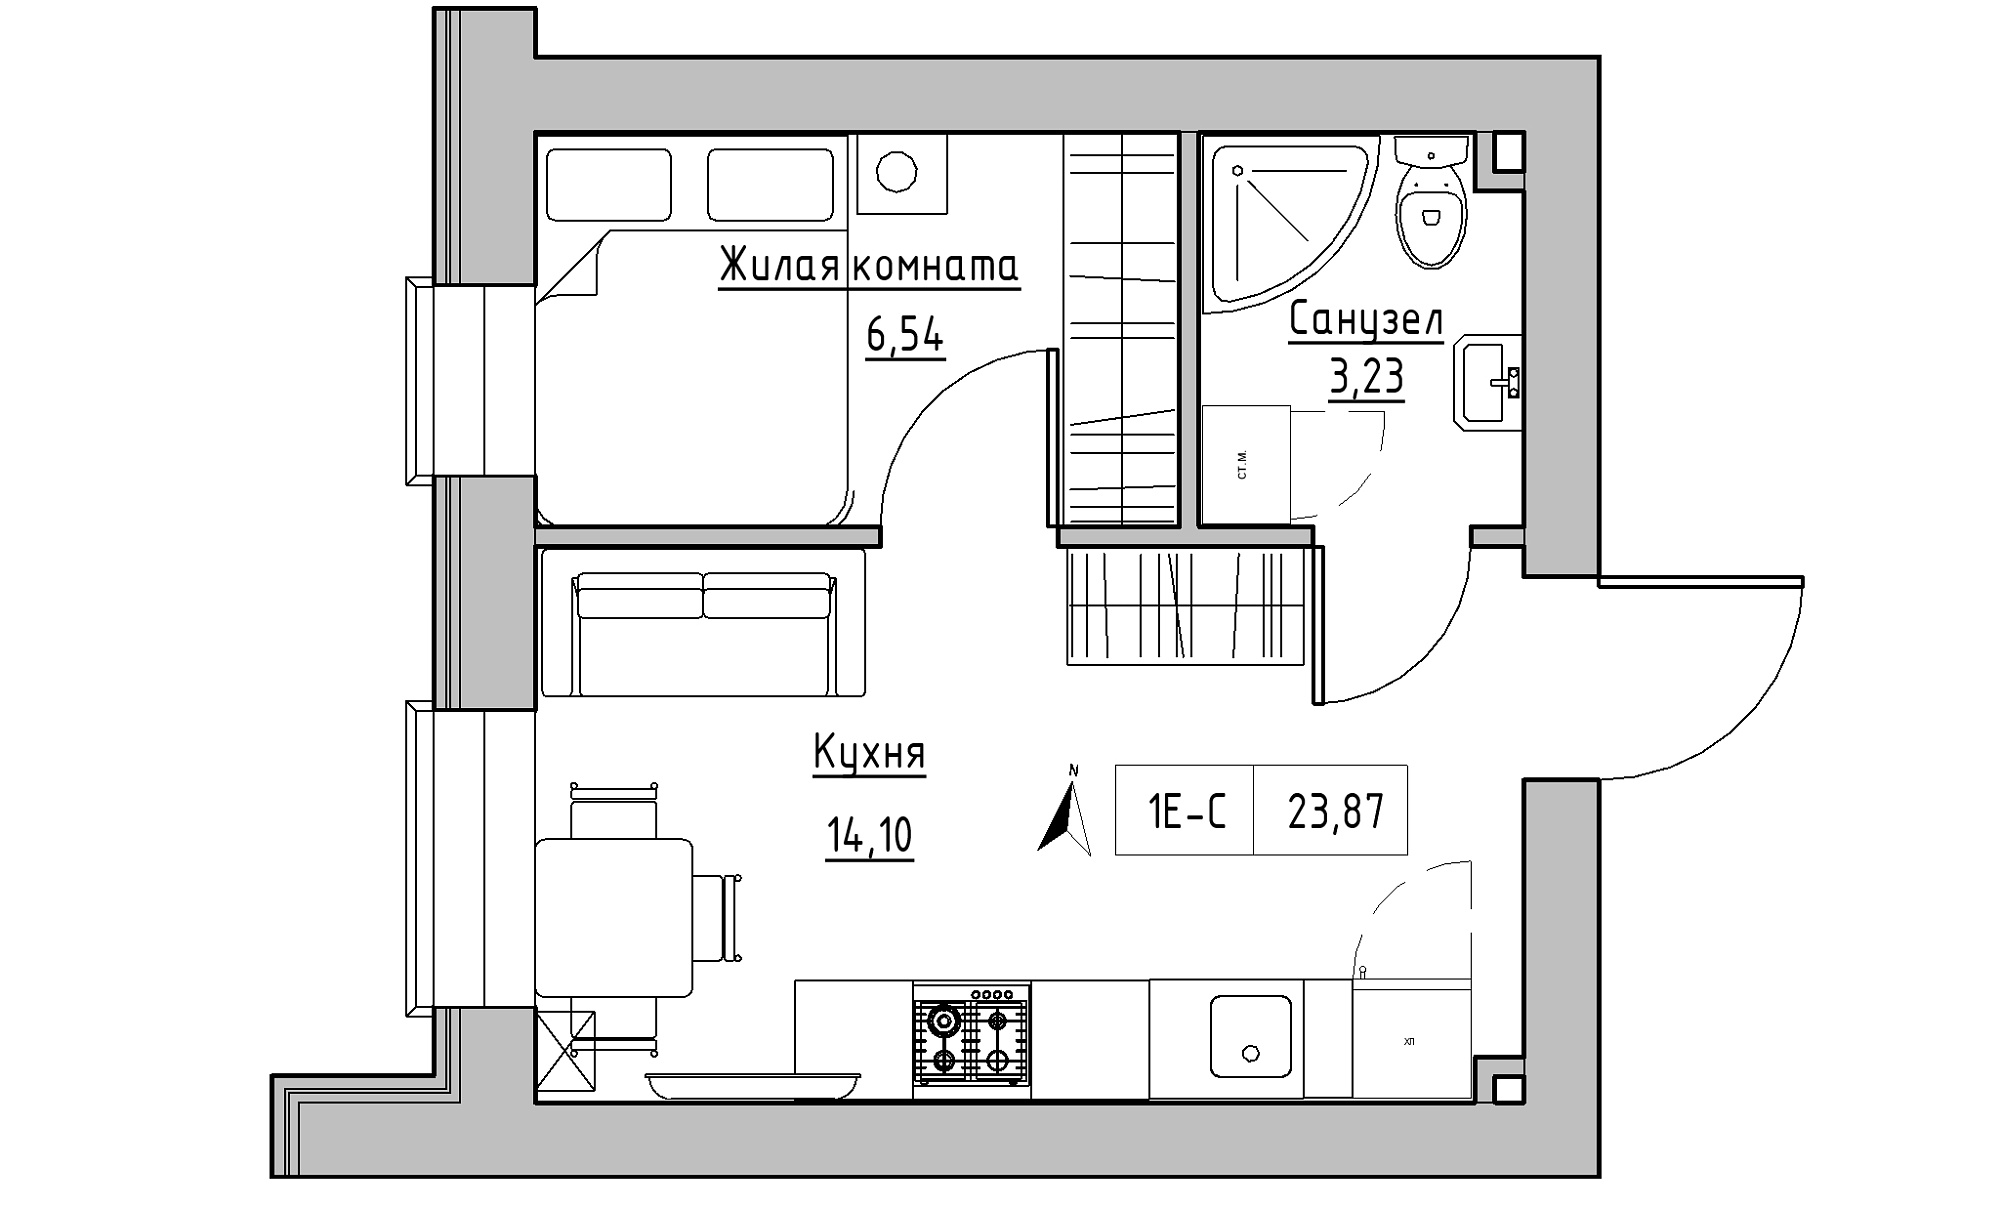 Planning 1-rm flats area 23.87m2, KS-016-03/0012.